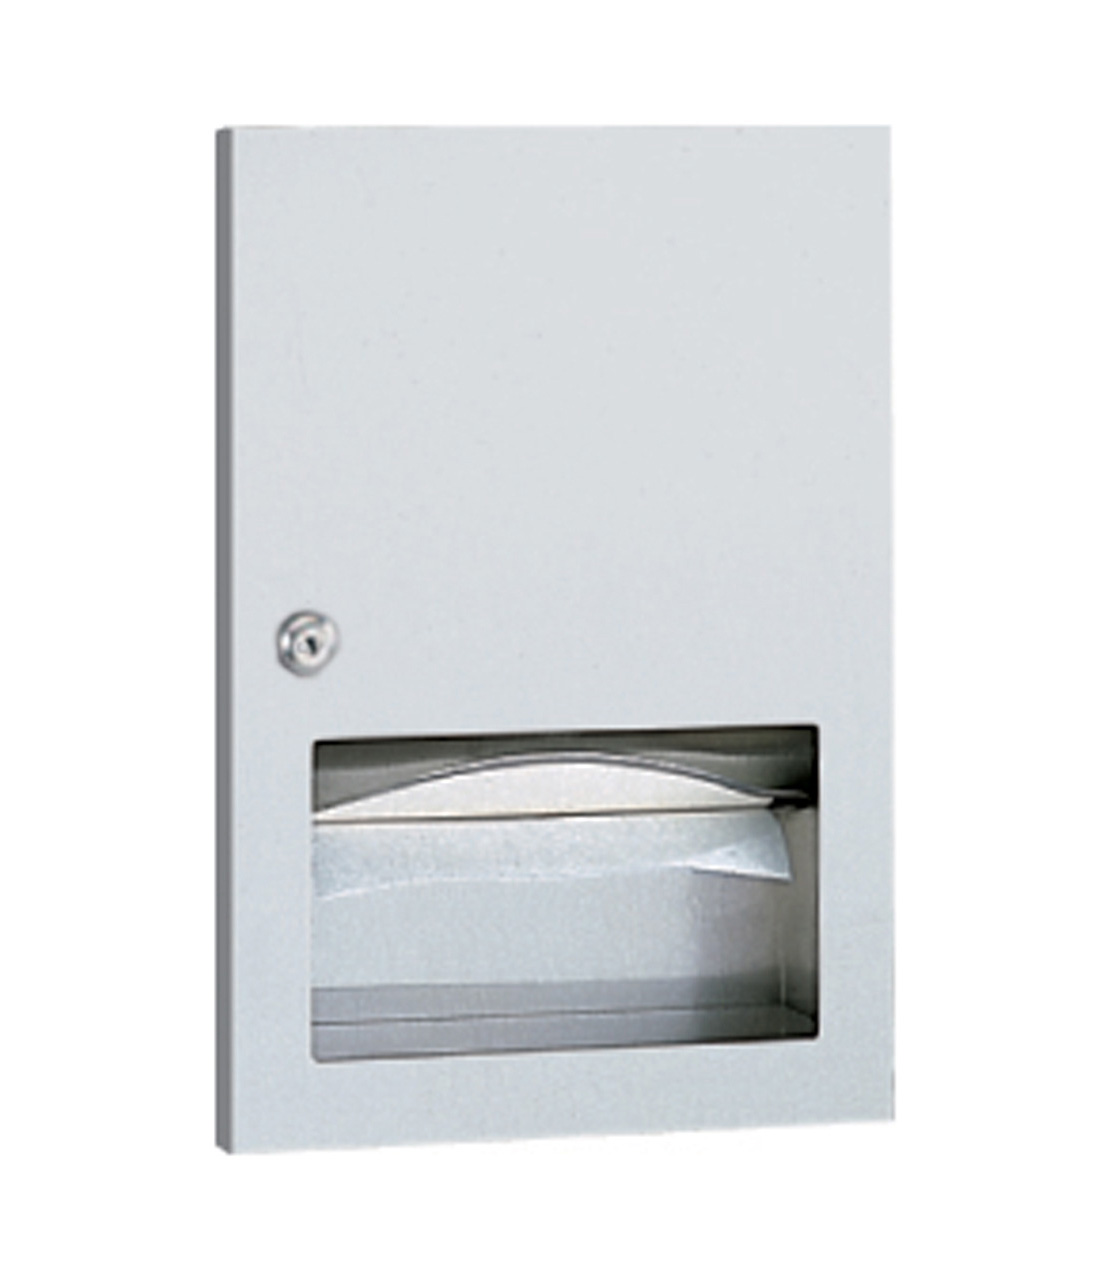 Coverall Recessed Towel Dispenser - (Model #: td-6) main image